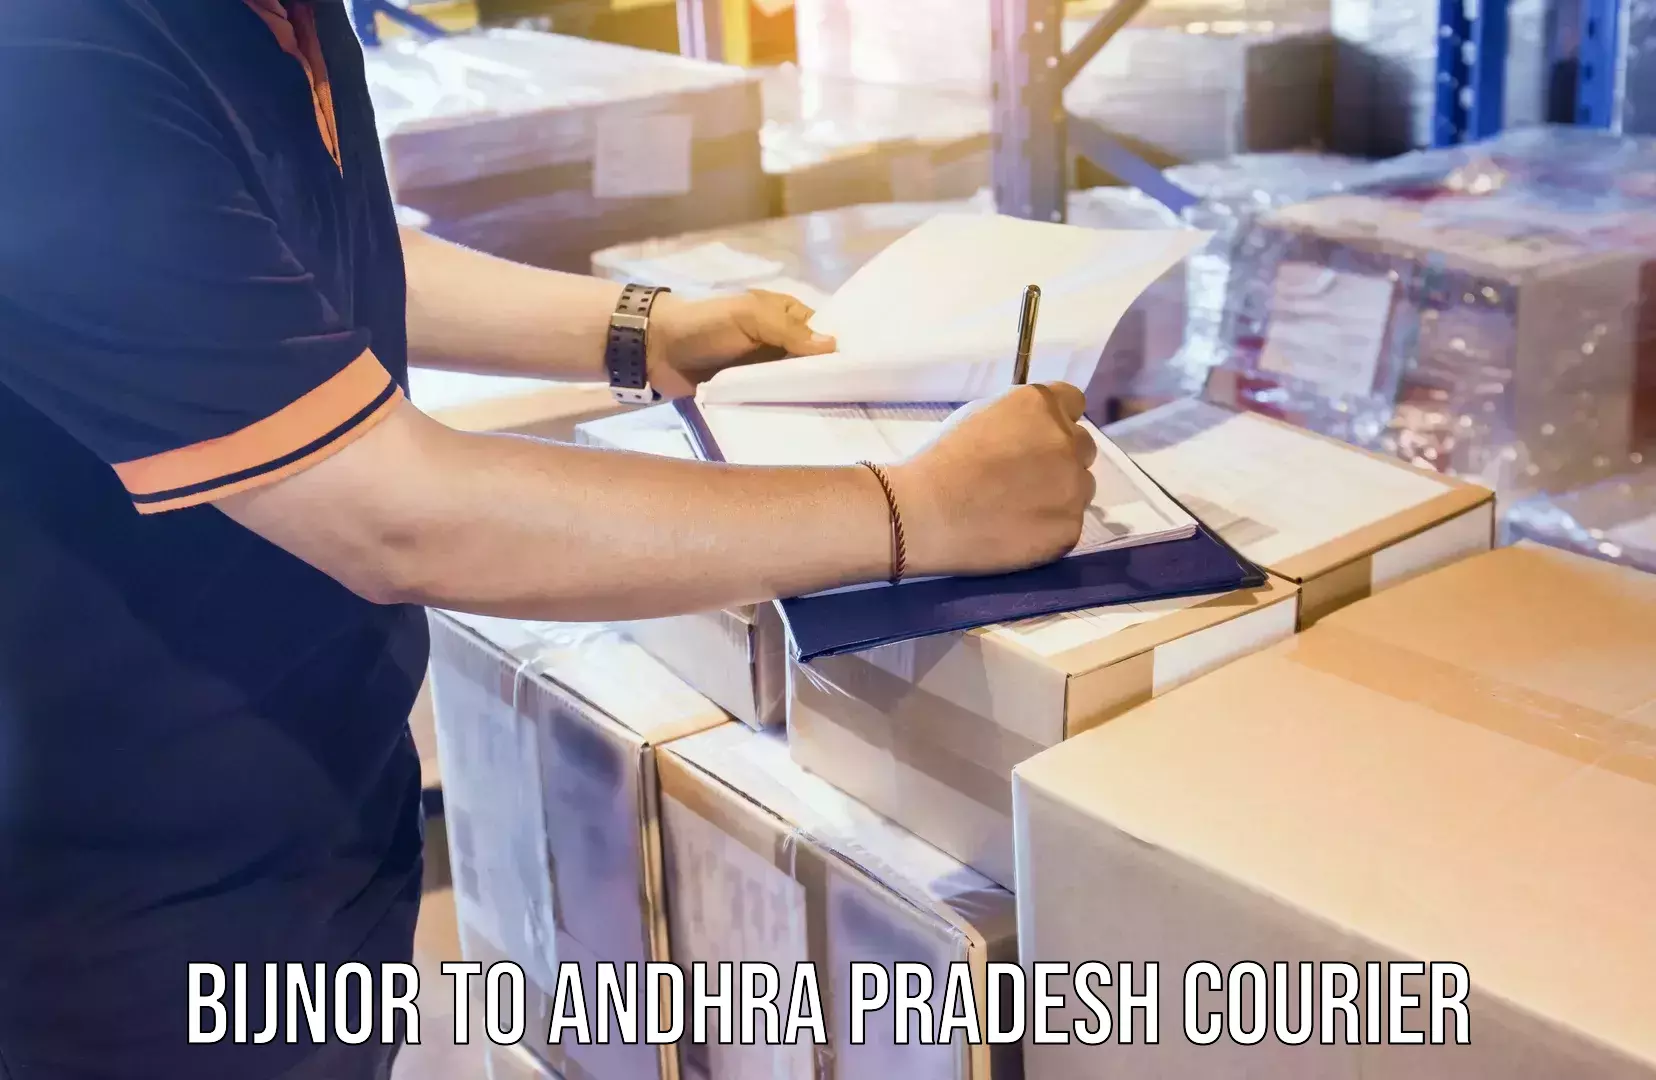 User-friendly delivery service Bijnor to Andhra Pradesh